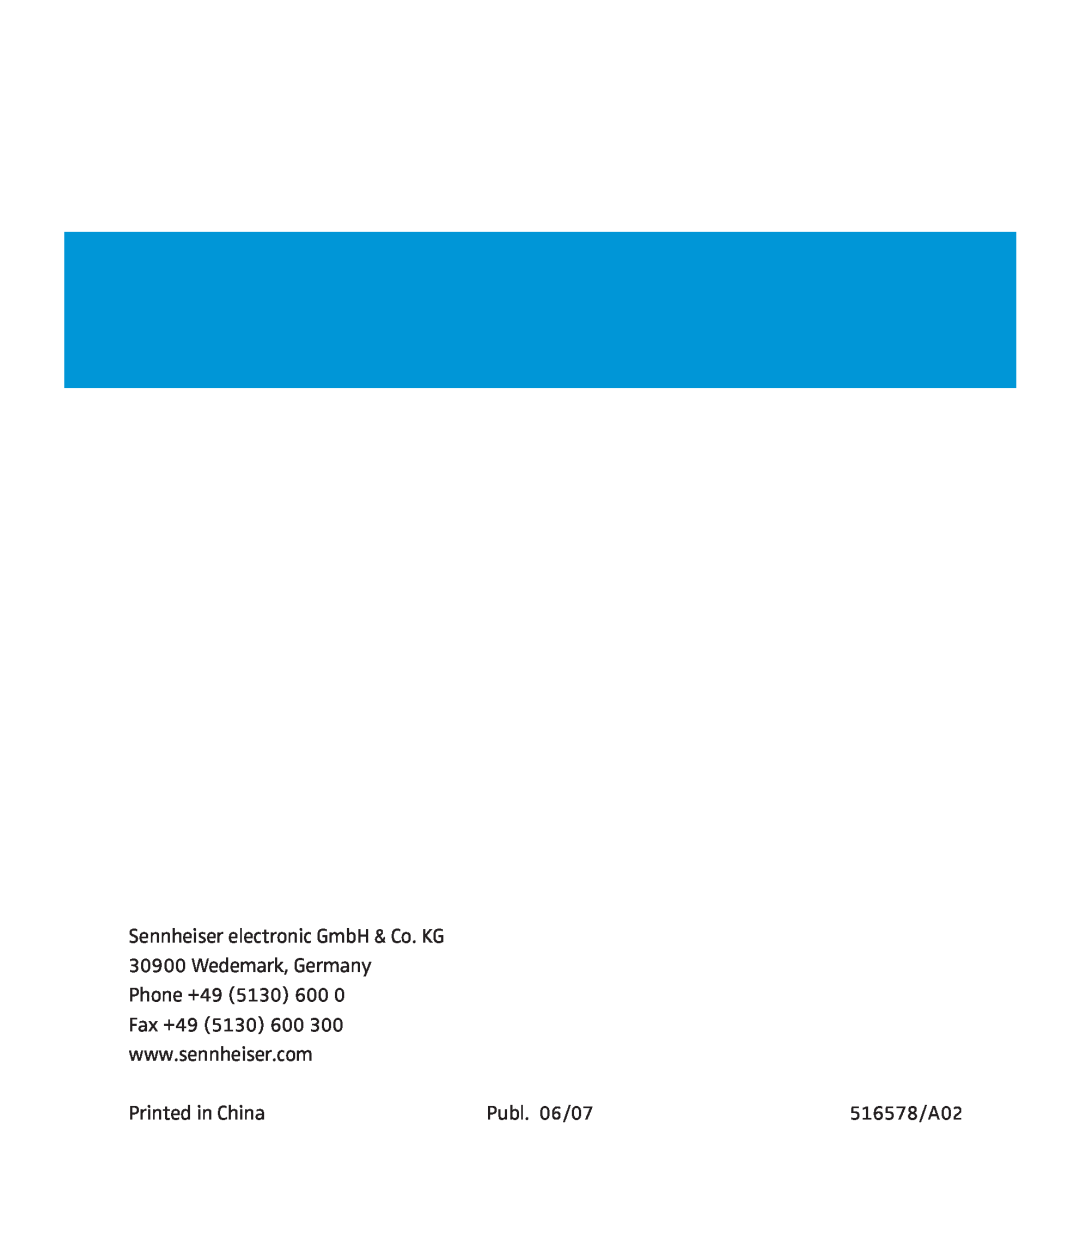 Sennheiser HMEC 250 instruction manual Publ. 06/07, 516578/A02 